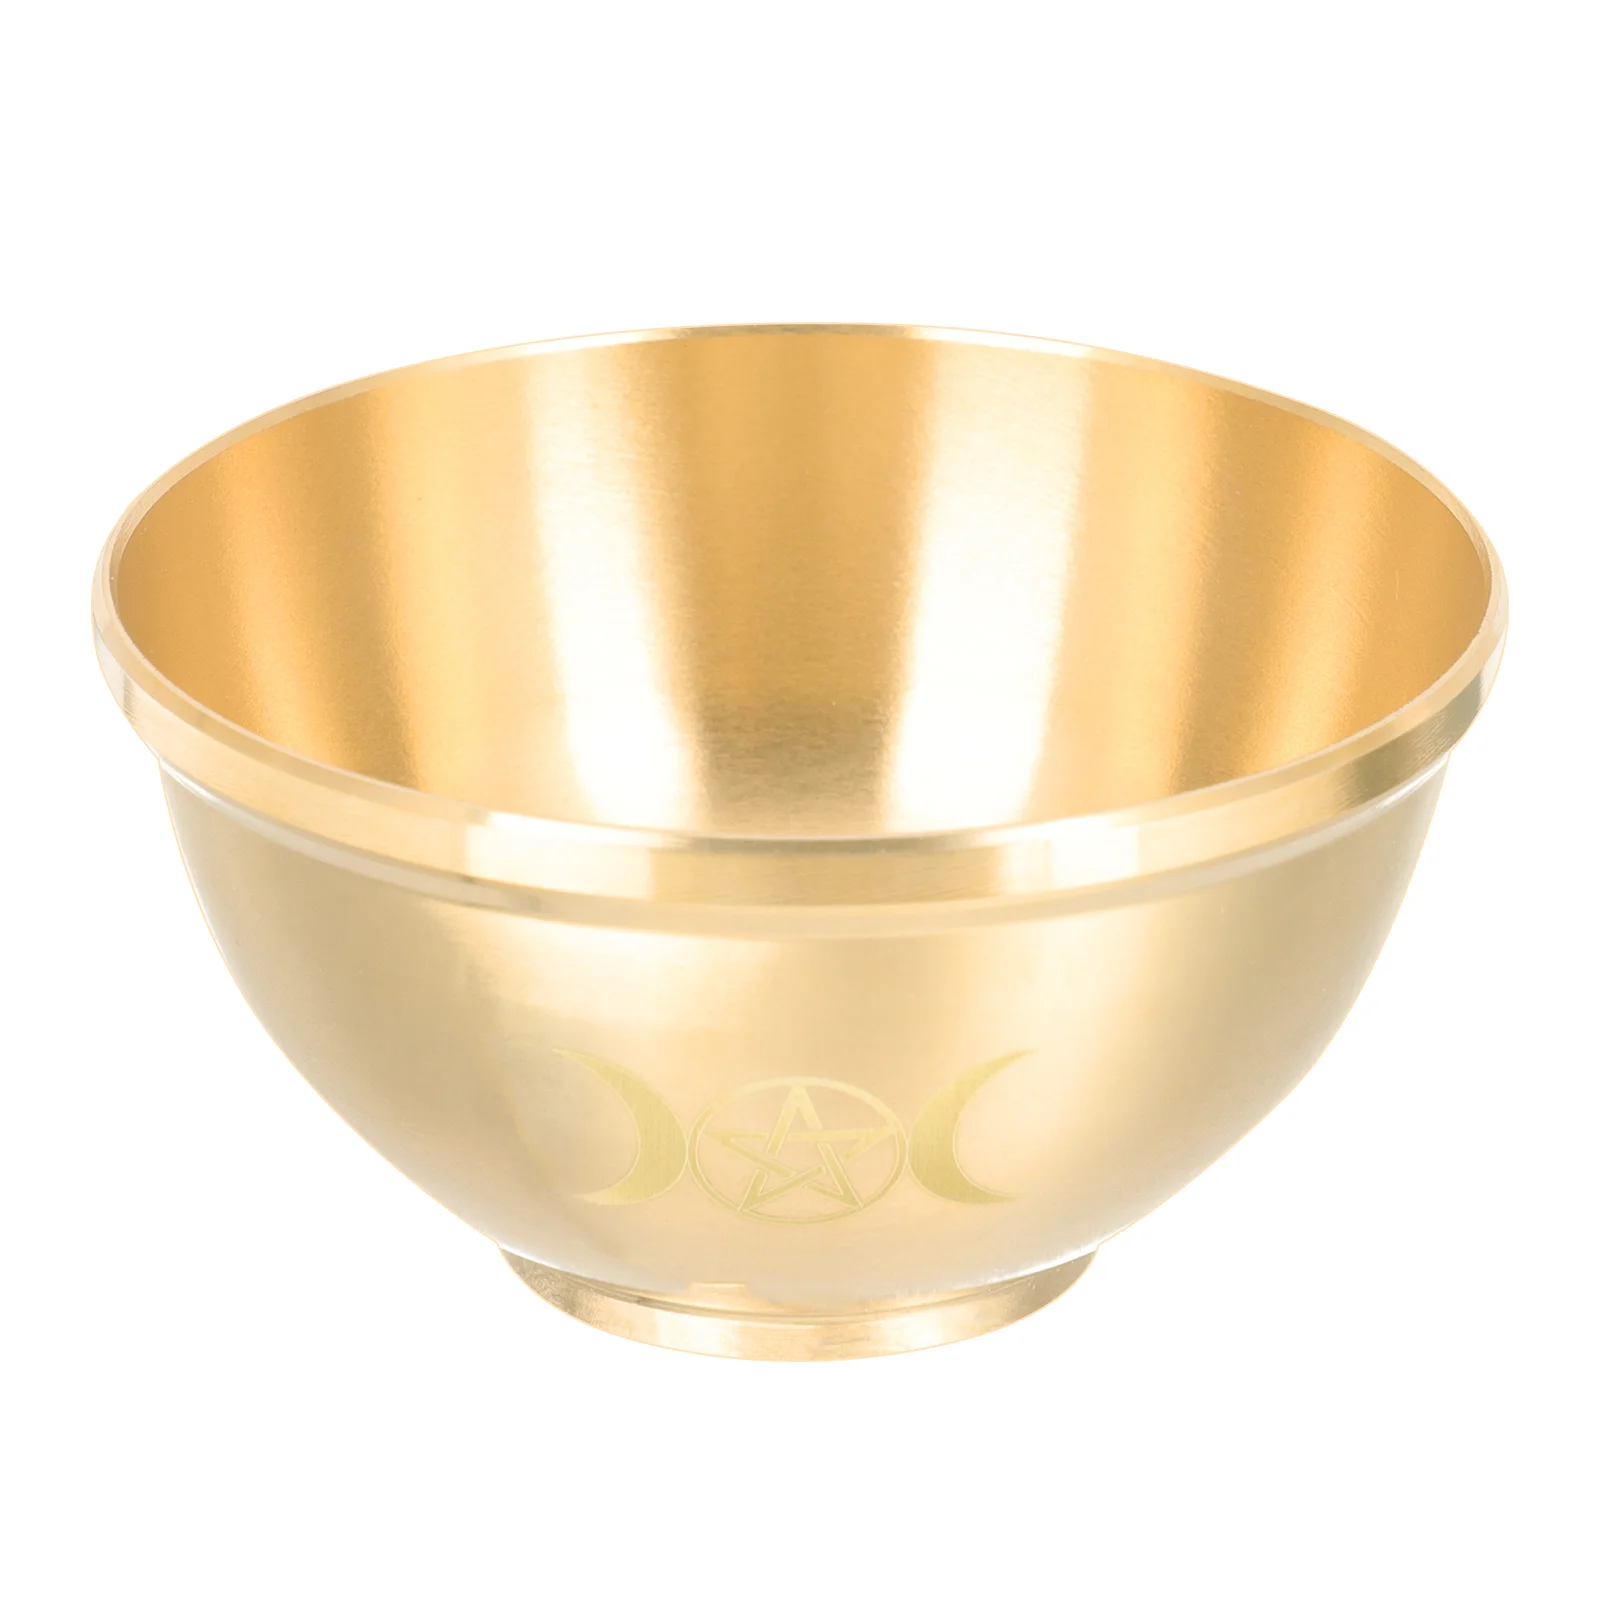 

Bowl Offering Brass Altar Water Worship Bowls Tibetan Ritual Sacrificialrice Copper Meditation Furnishing Articles Supplies